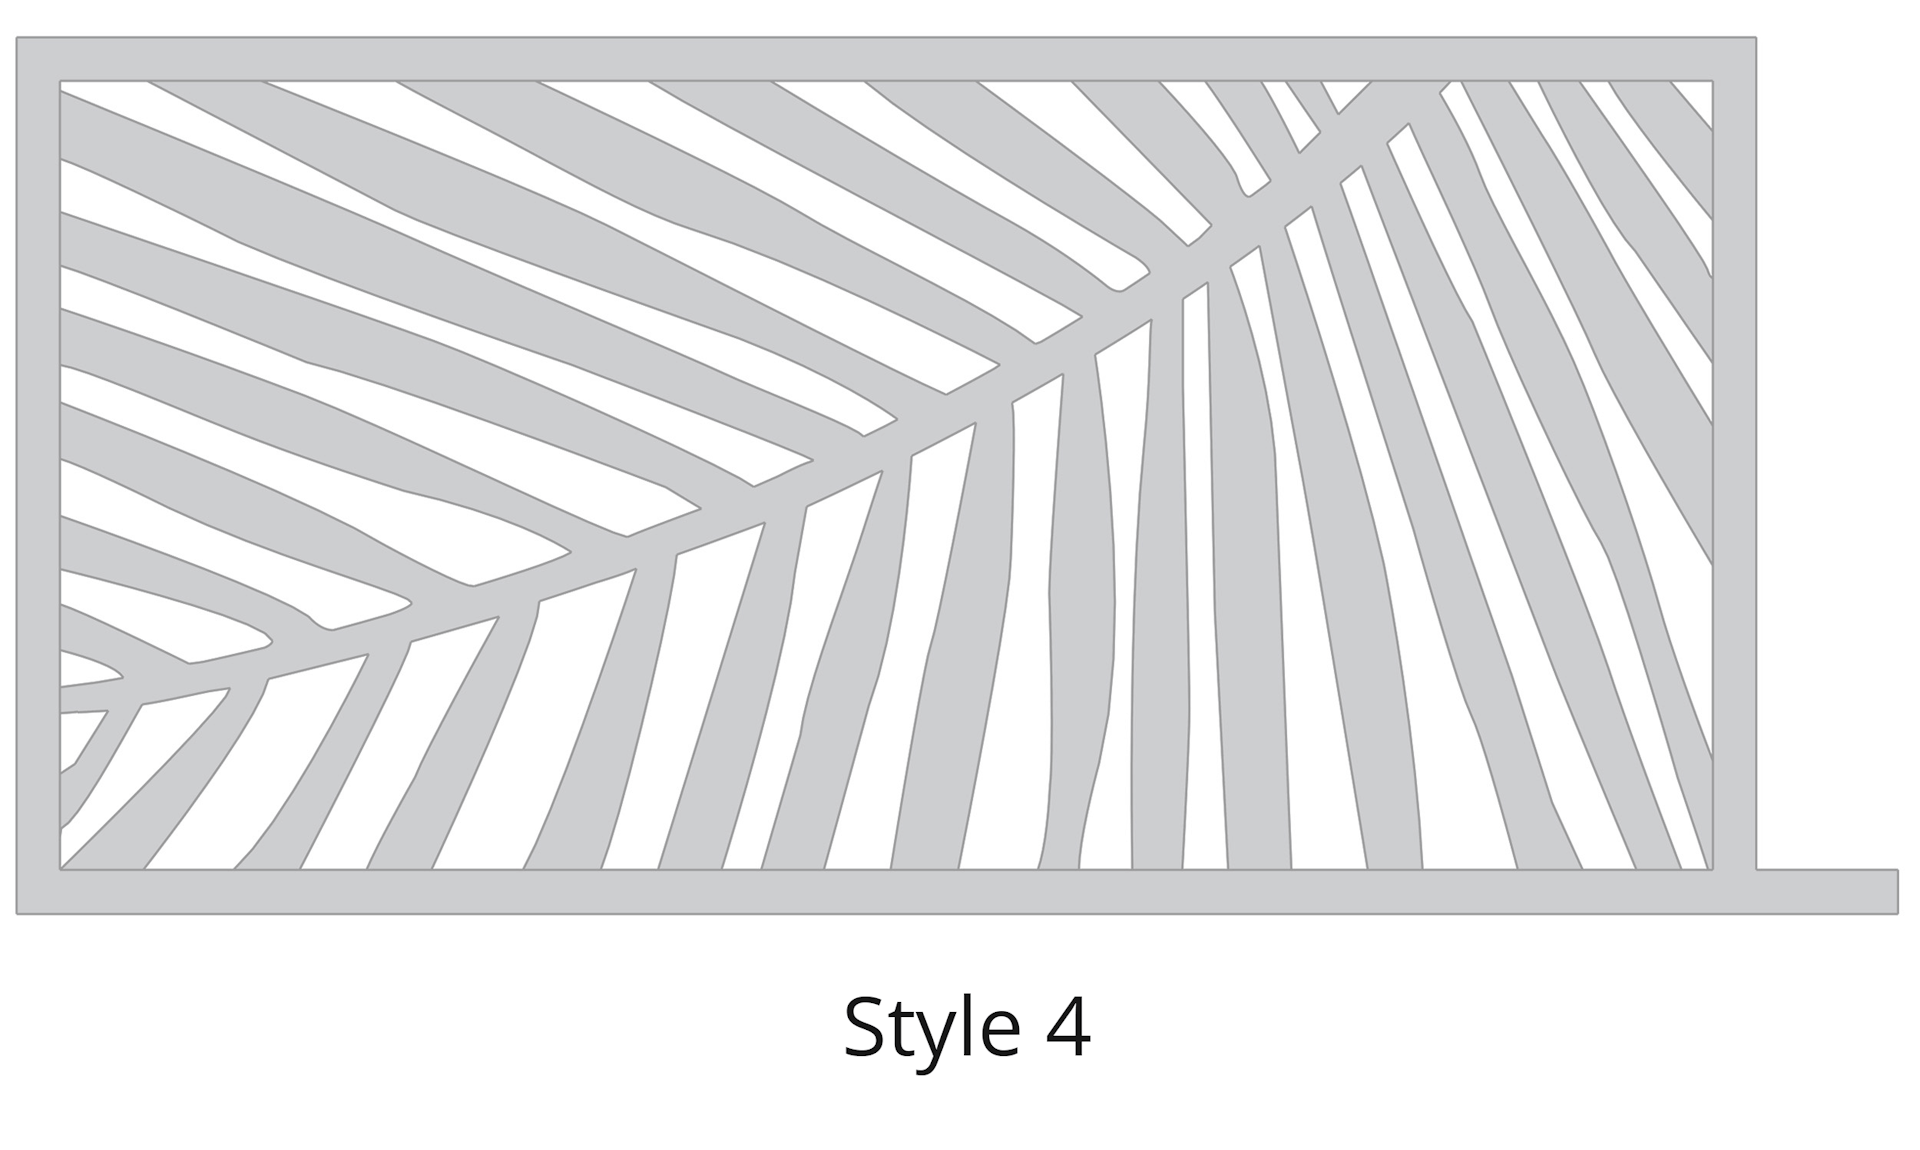 Lazer Cut Gate Design - Style #4